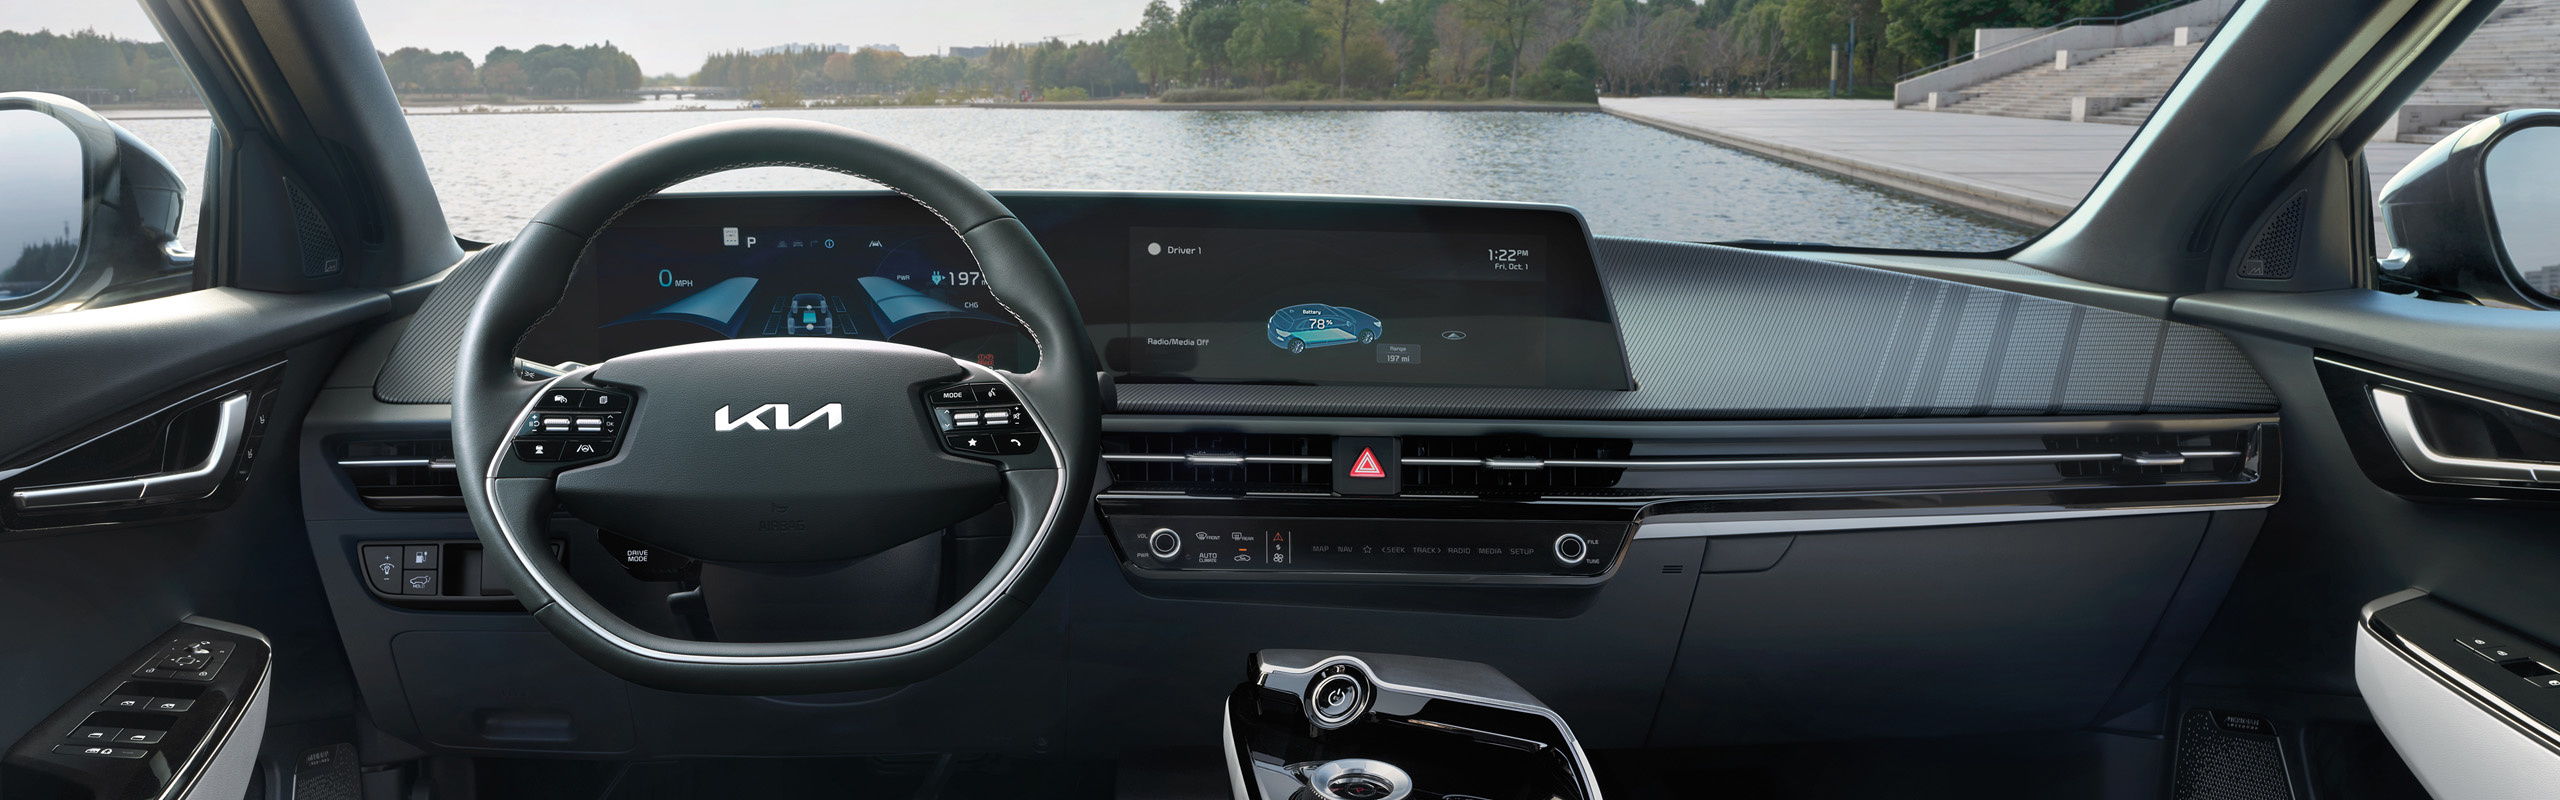 2023 Kia EV6 Interior 12.3-Inch Dual Panoramic Displays Close-Up